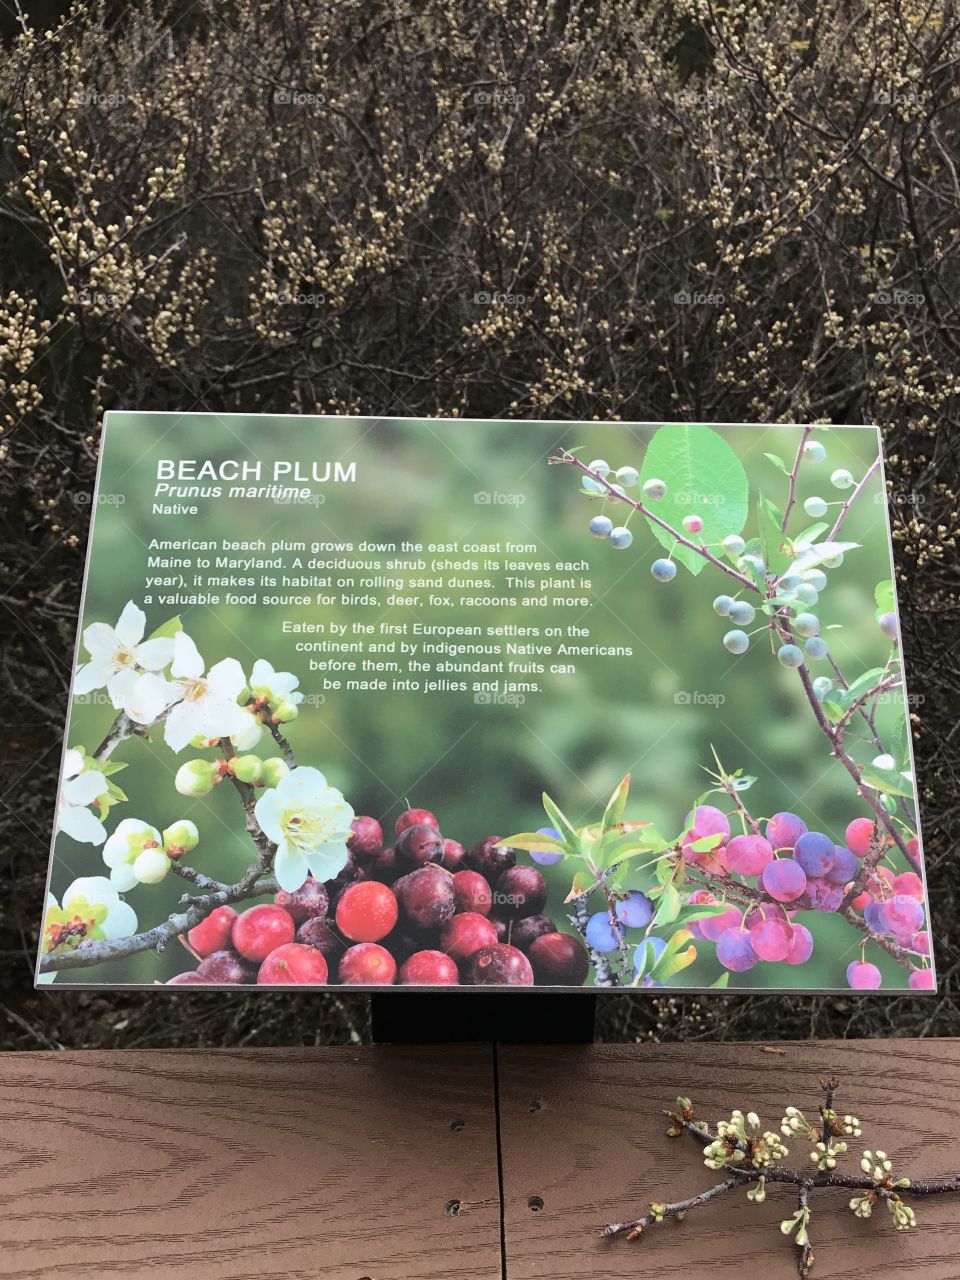 Beach plum plant